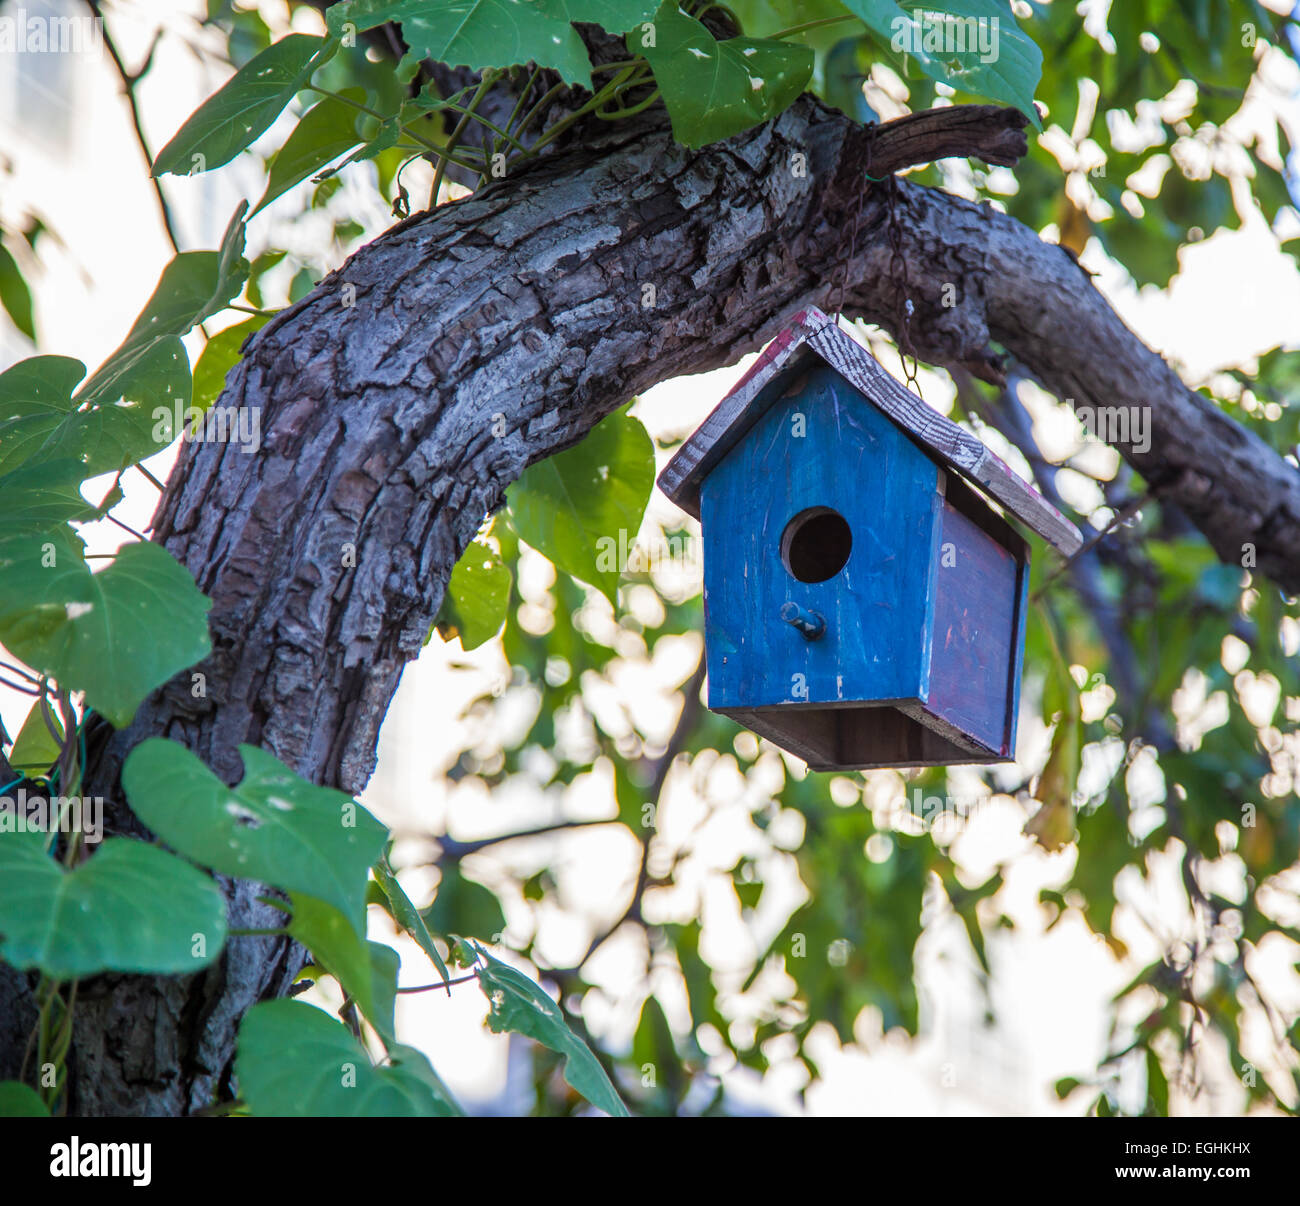 Bird house hanging in tree Stock Photo